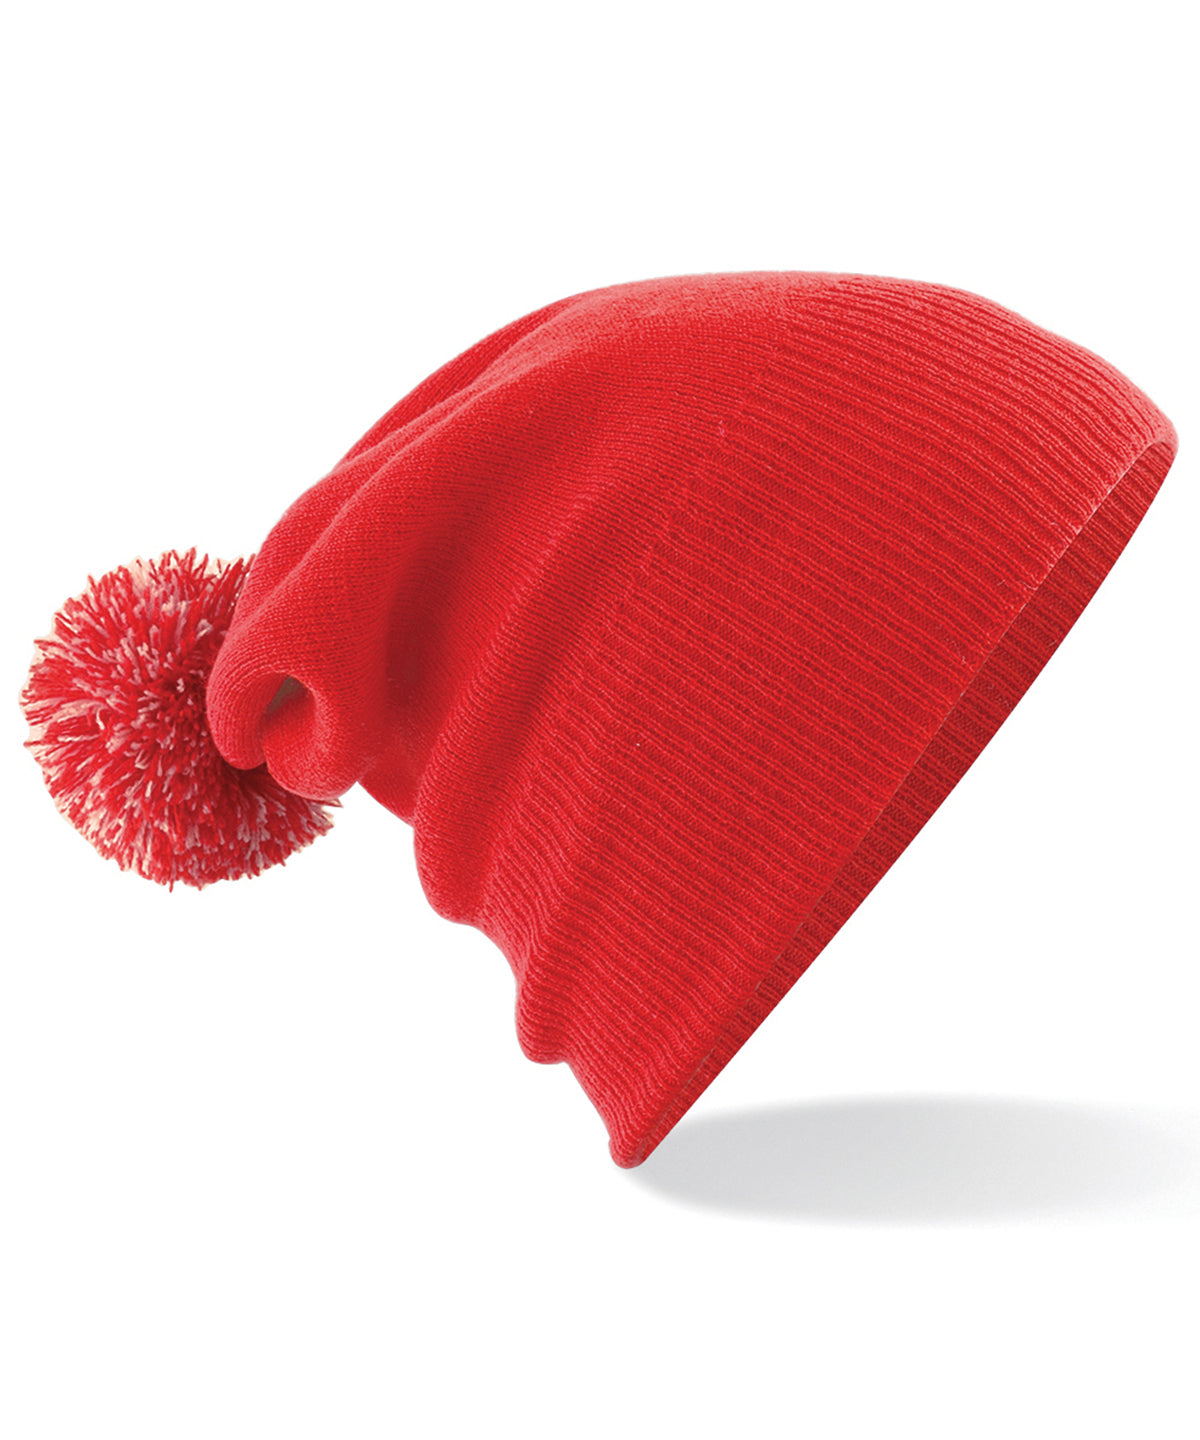 Personalised Hats - Bright Red Beechfield Junior snowstar® beanie